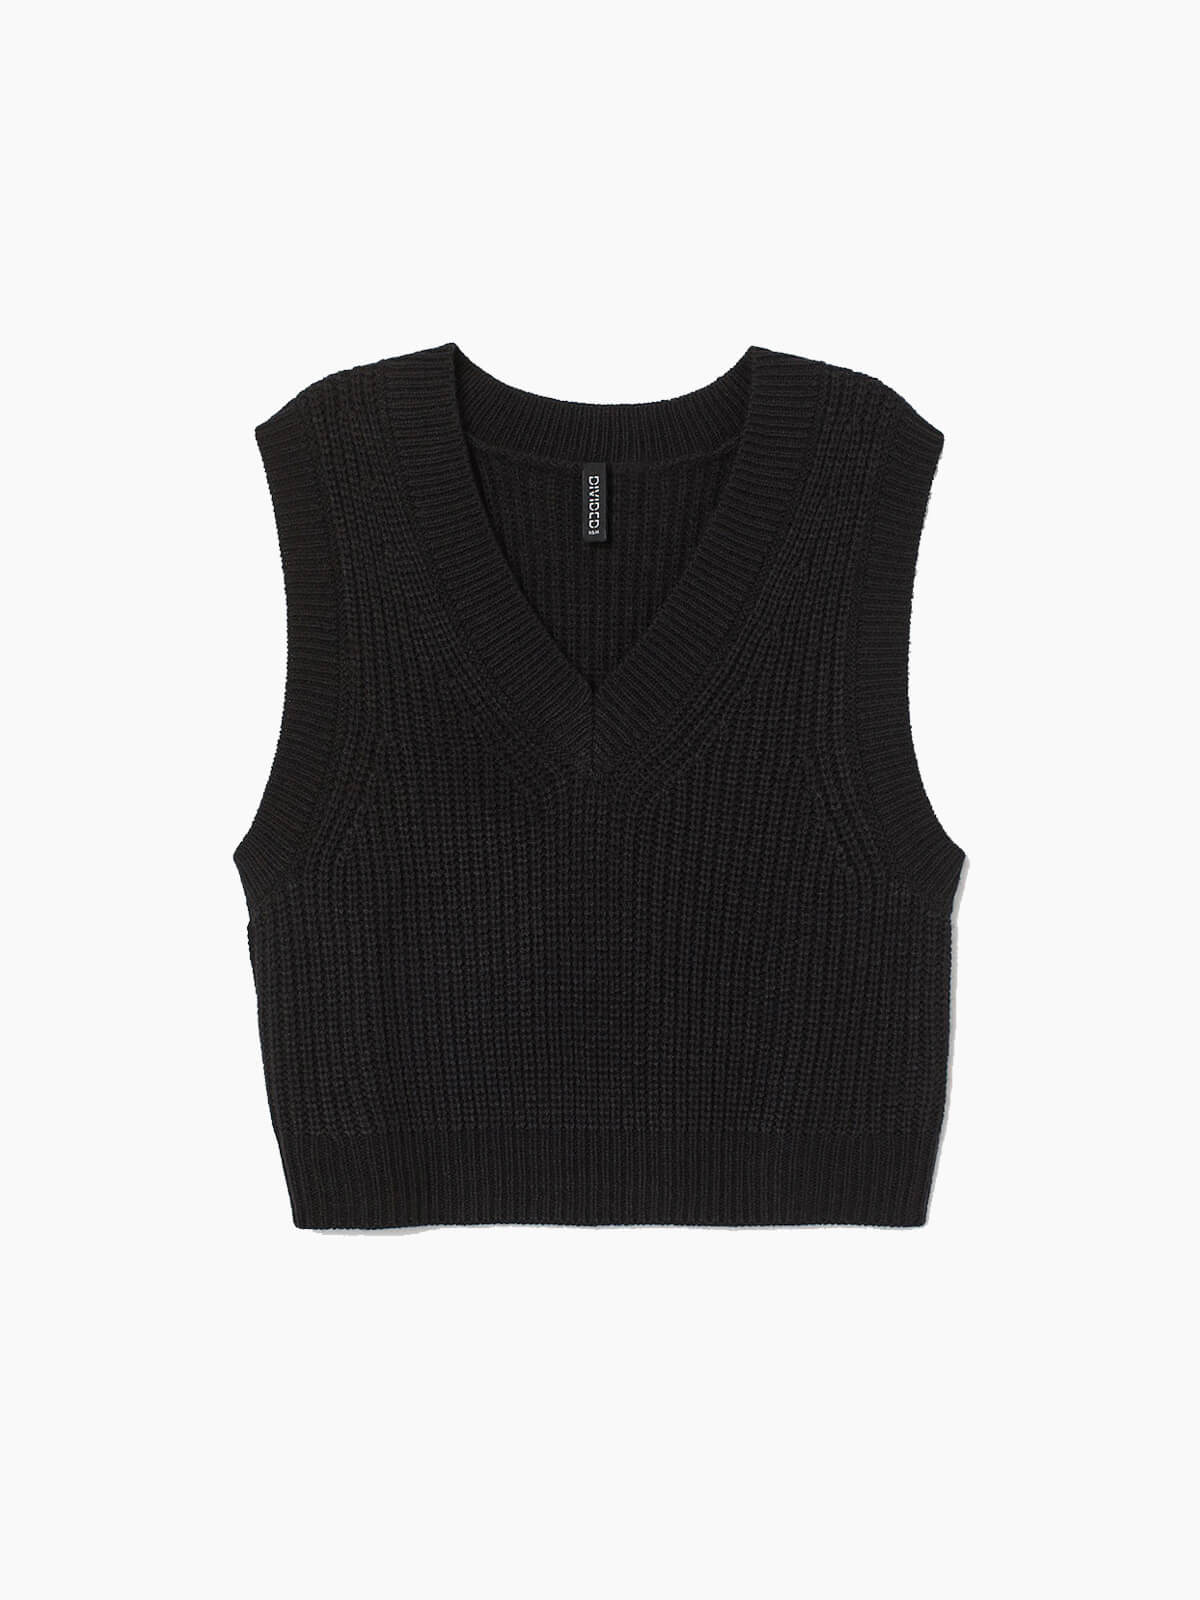 Short sweater vest